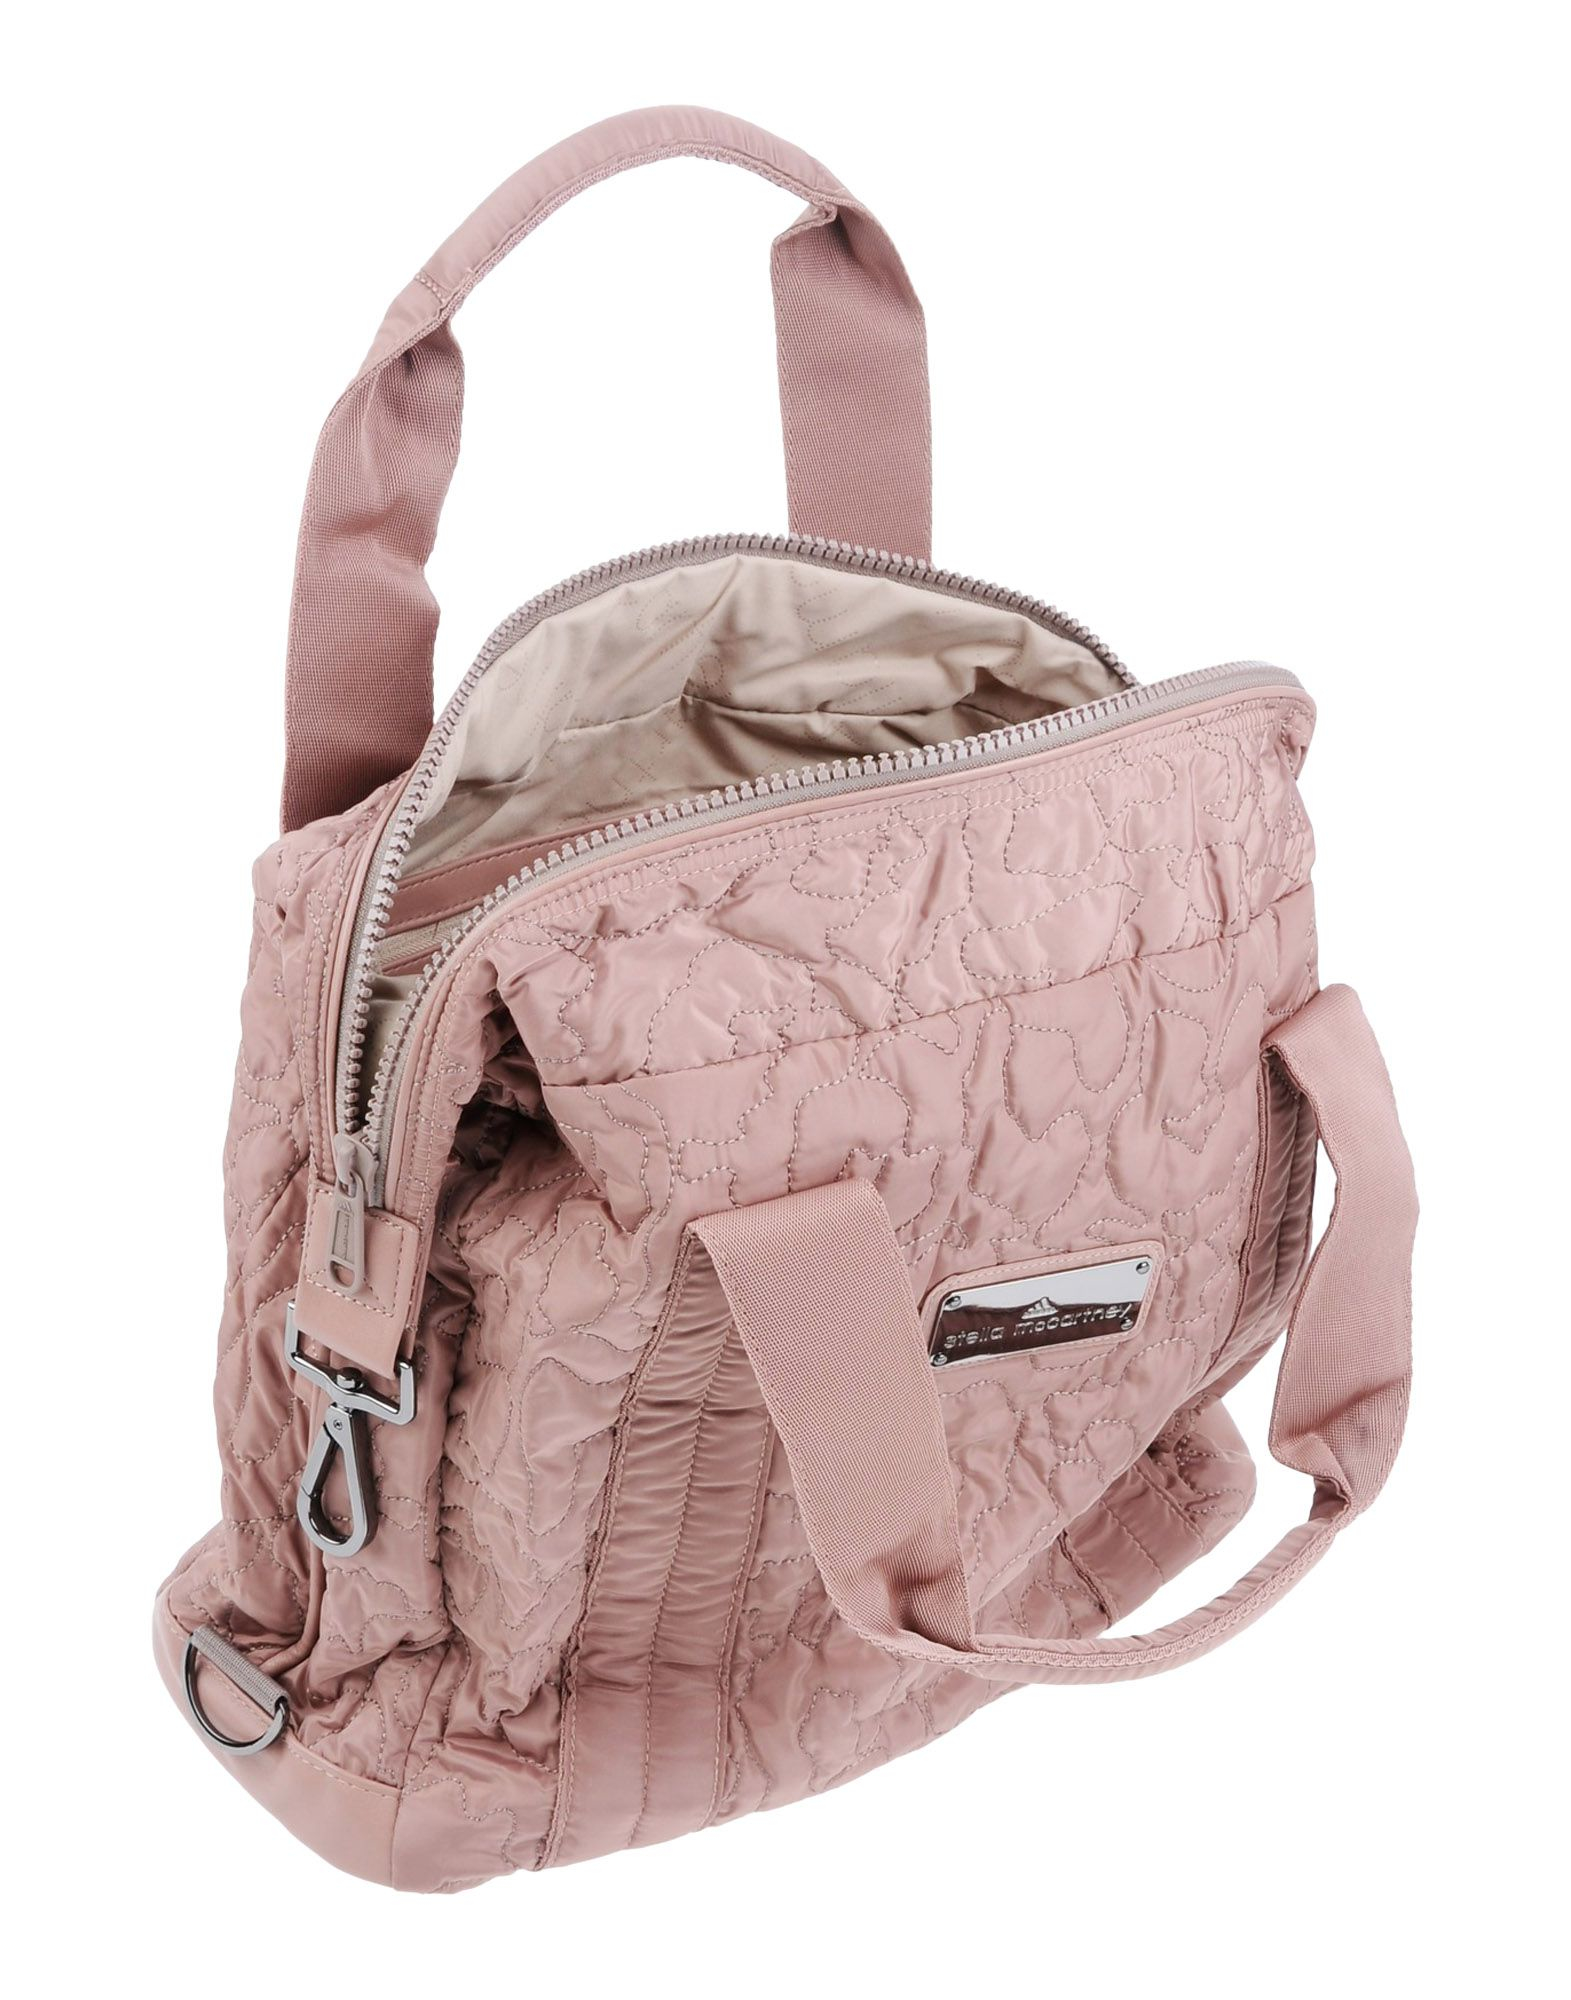 adidas By Stella McCartney Medium Quilted Gym Bag in Pastel Pink (Pink) |  Lyst UK